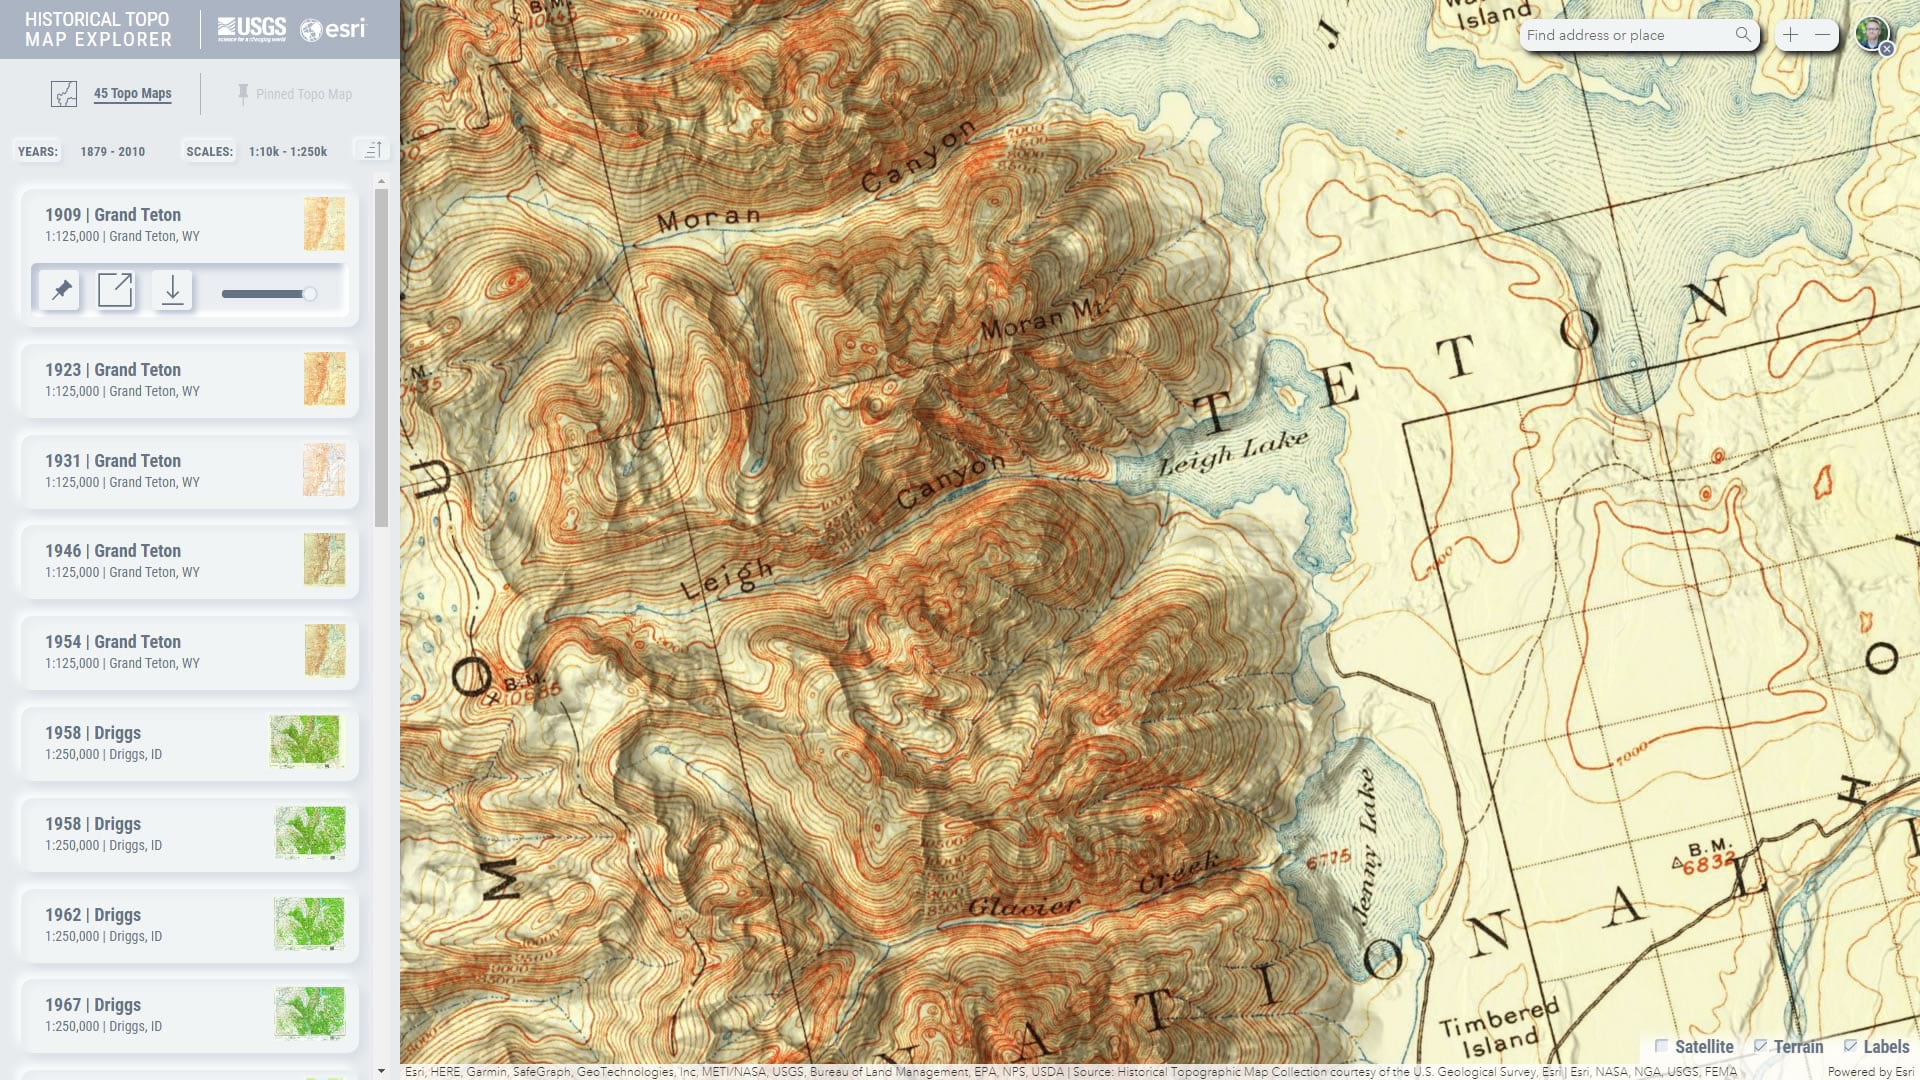 USGS Topo Map Explorer